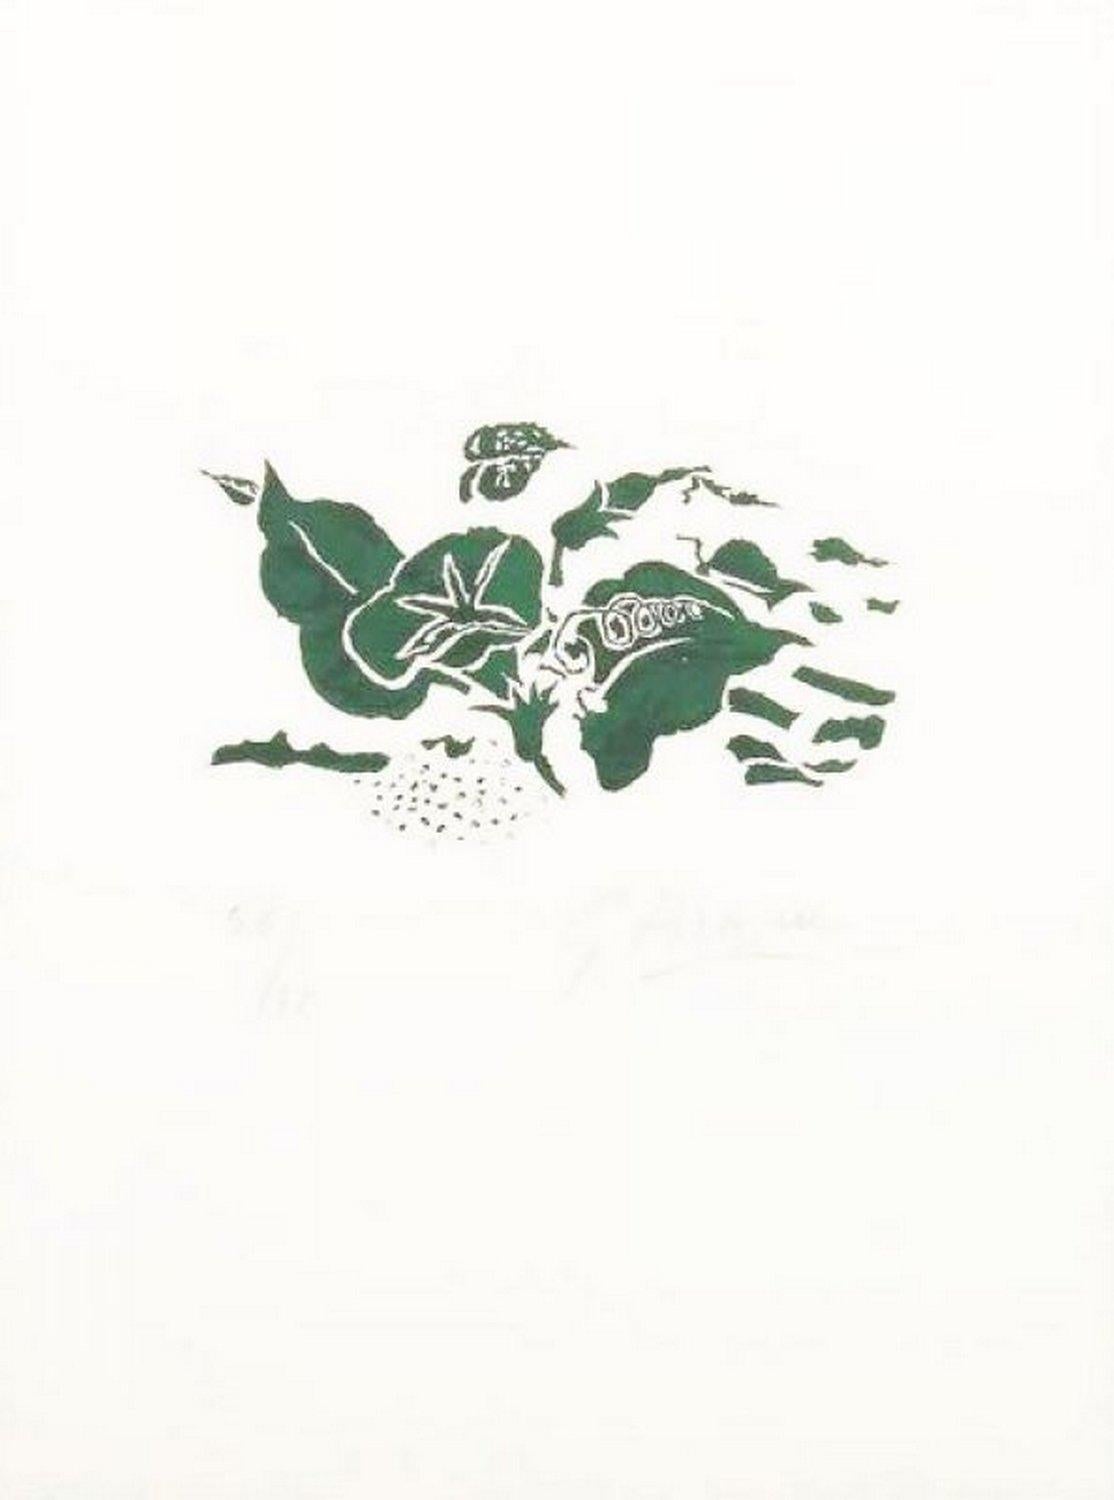 George Braque Abstract Print - Le liseron vert : Lettera Amorosa 